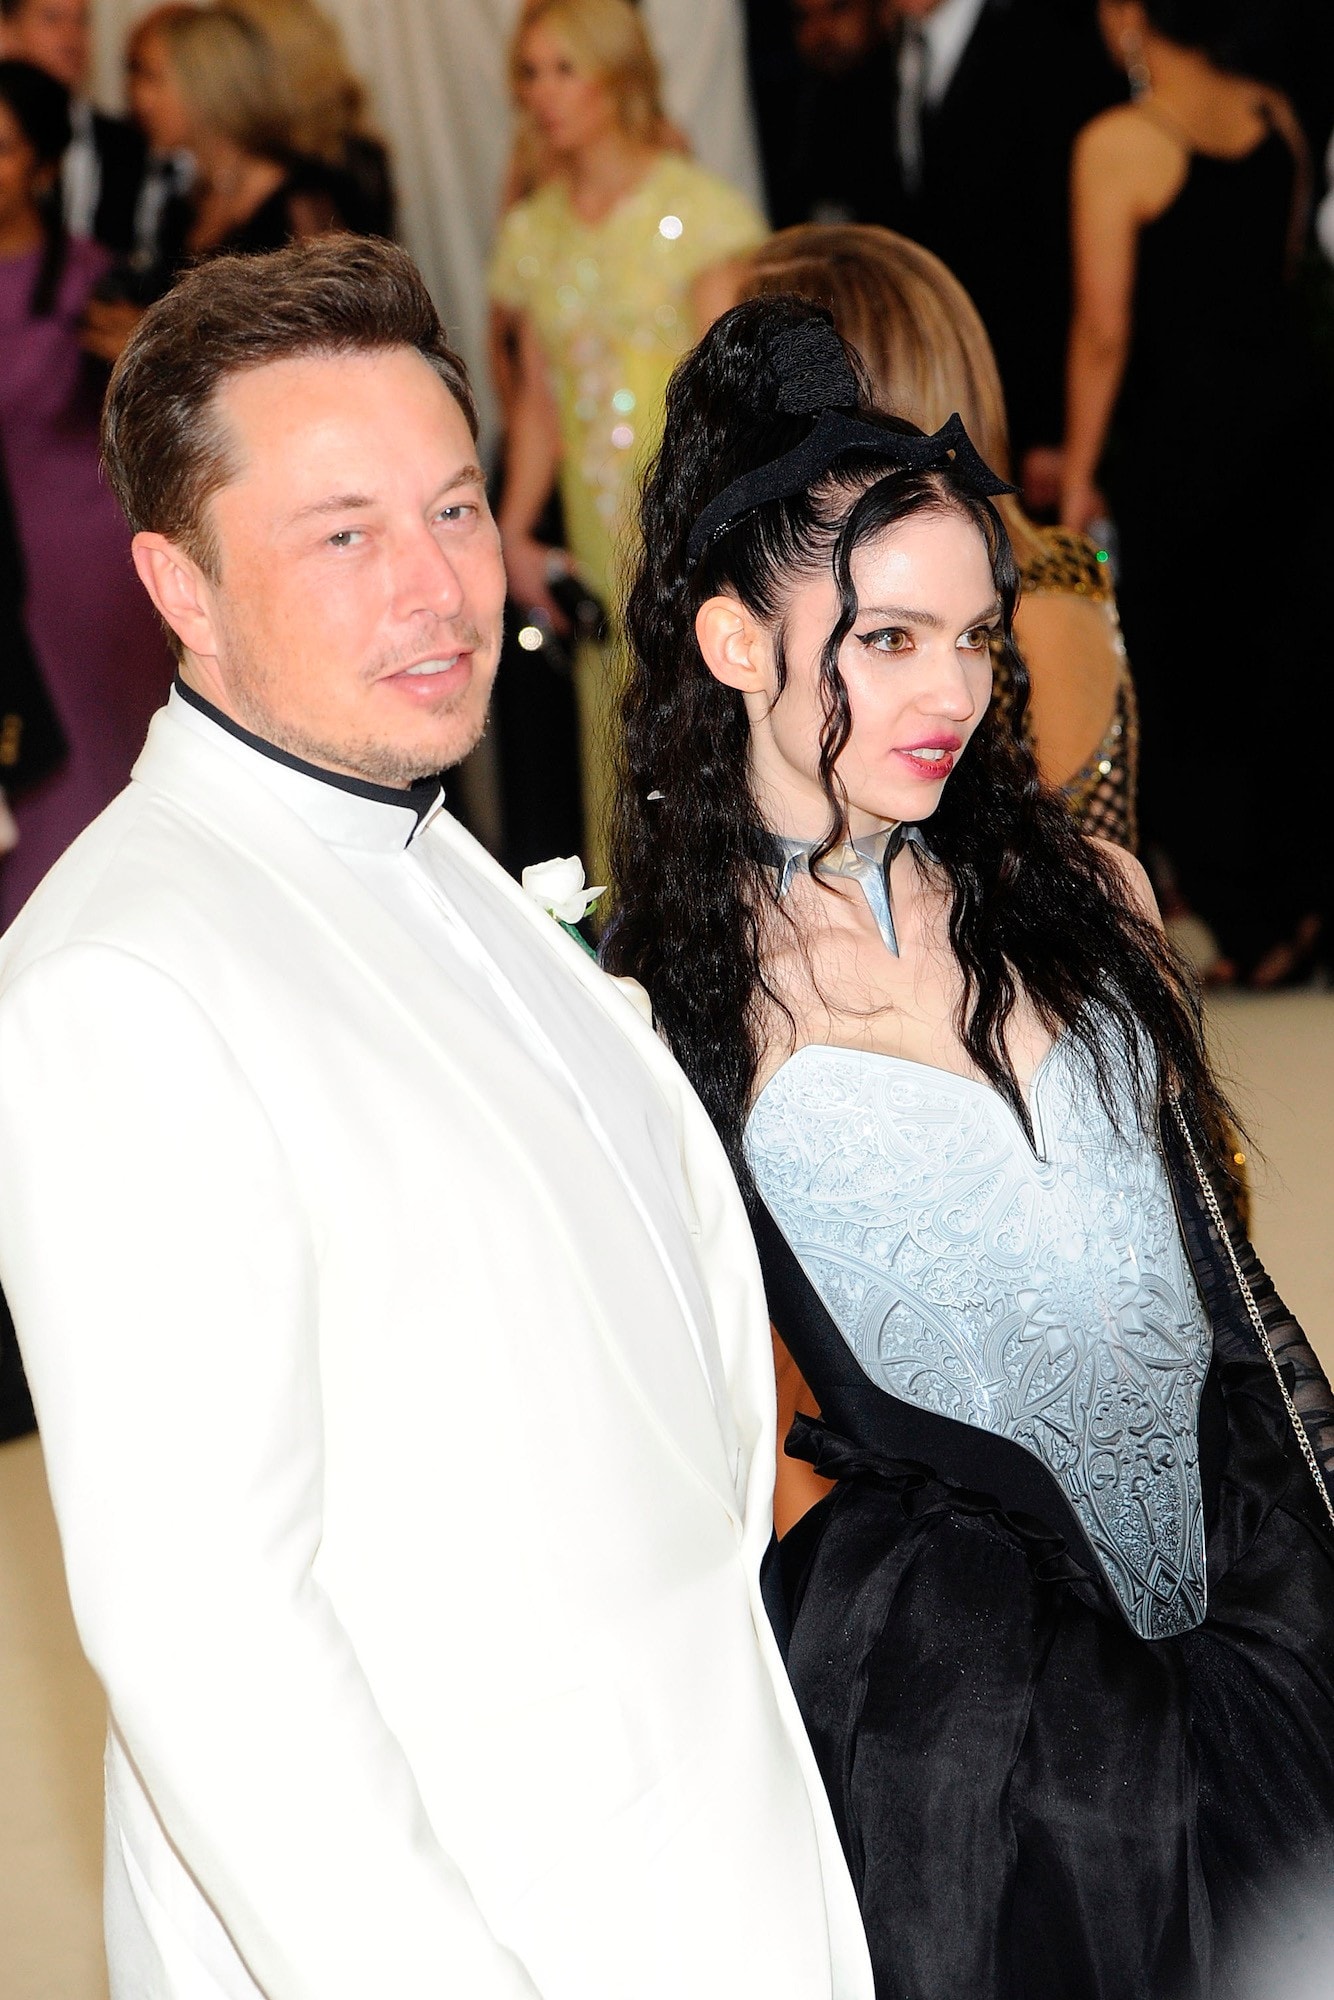 Grimes Elon Musk Met Gala Red Carpet 2018 Tesla CEO Musician 